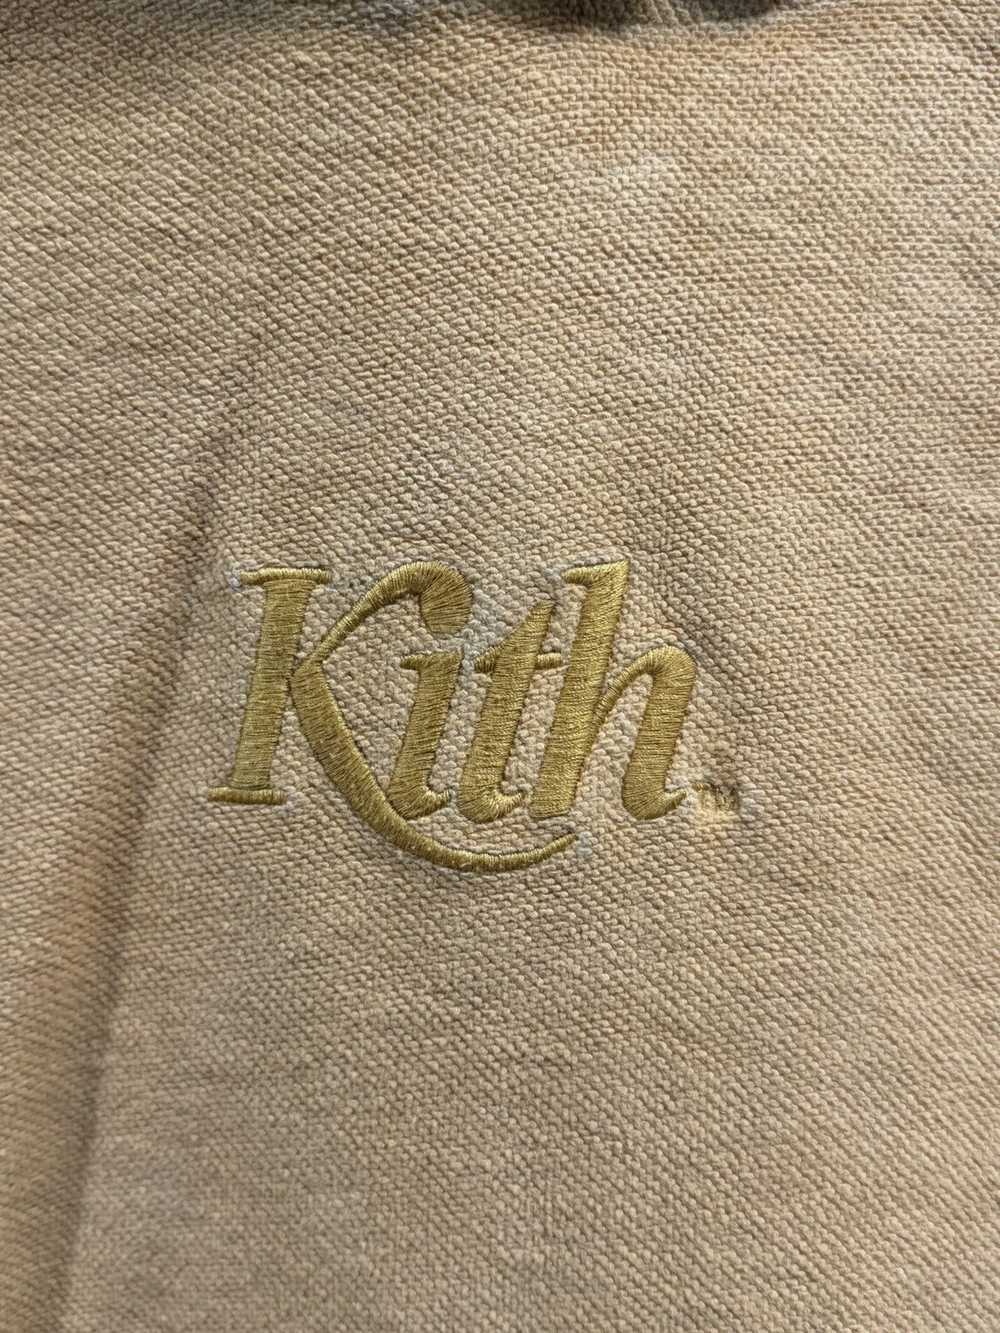 Kith Kith Reverse Williams Hoodie - image 3